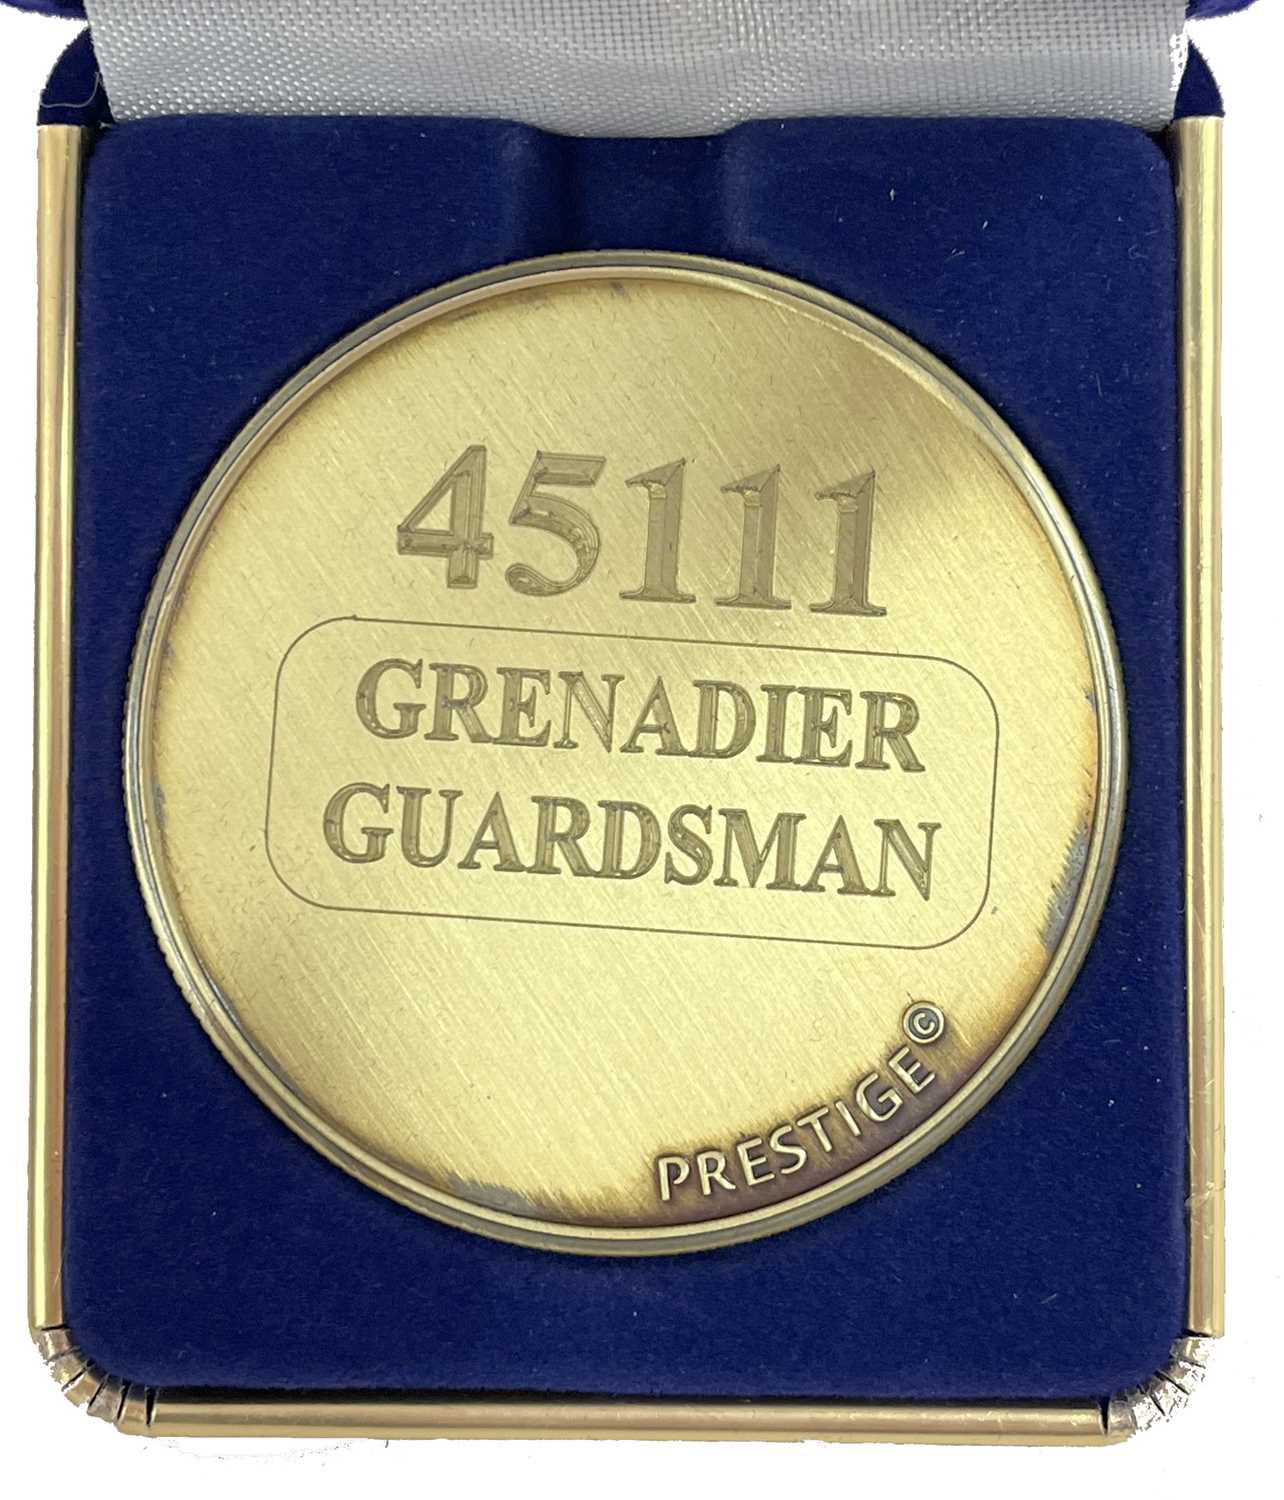 A commemorative gold award medallion to 45111 Grenadier Guardsman